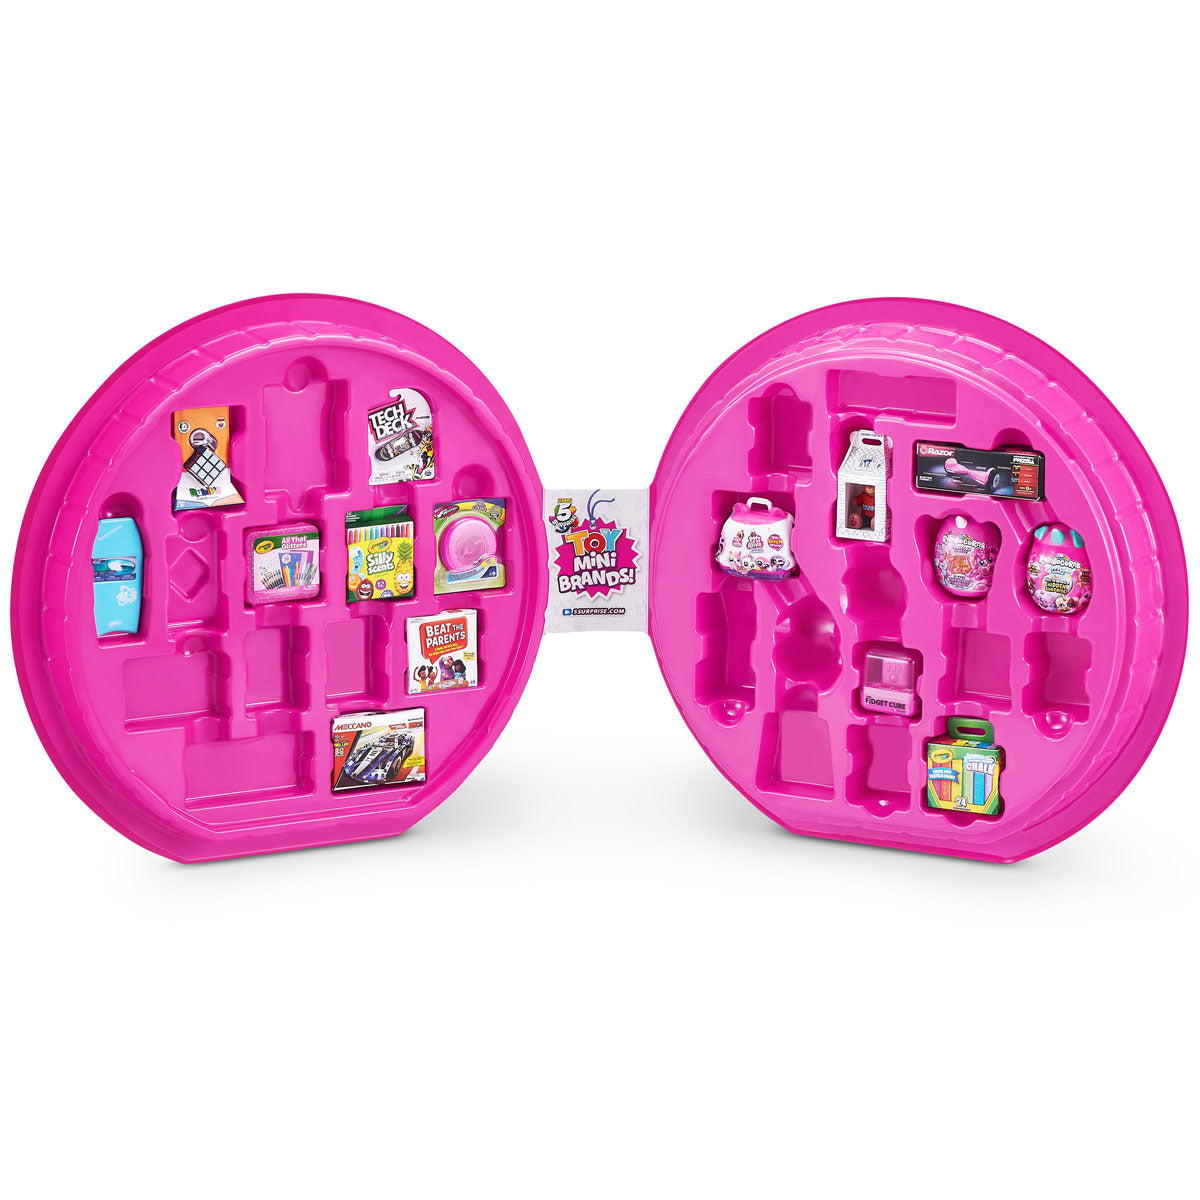 5 Surprise Toy Mini Brands Series 2 Collector's Case by ZURU